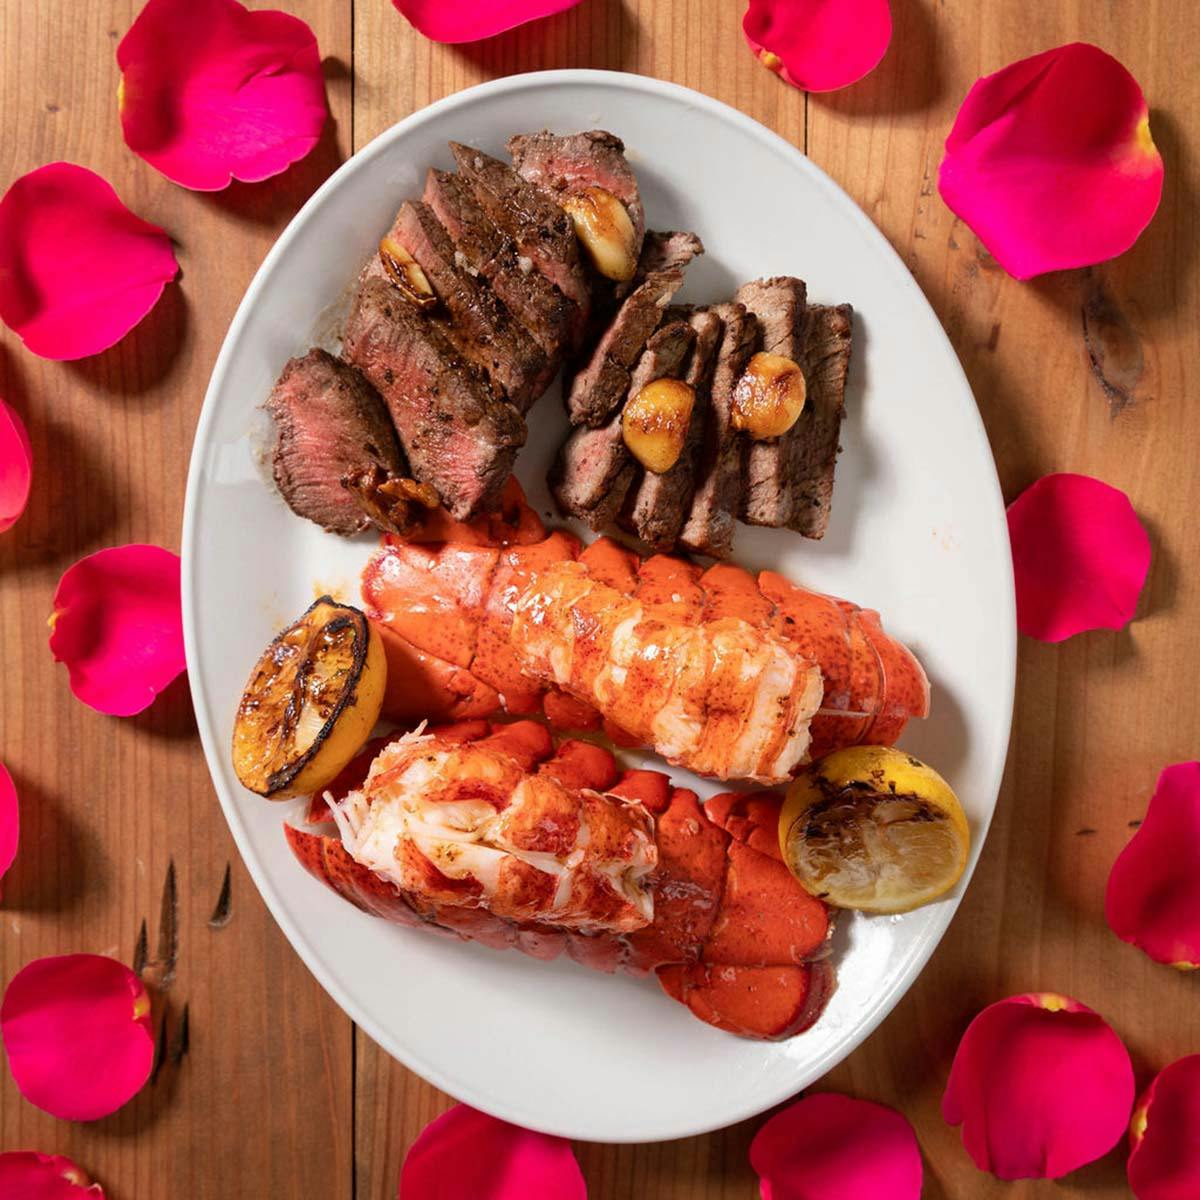 2 Pack Red Lobster Signature Seafood Seasoning